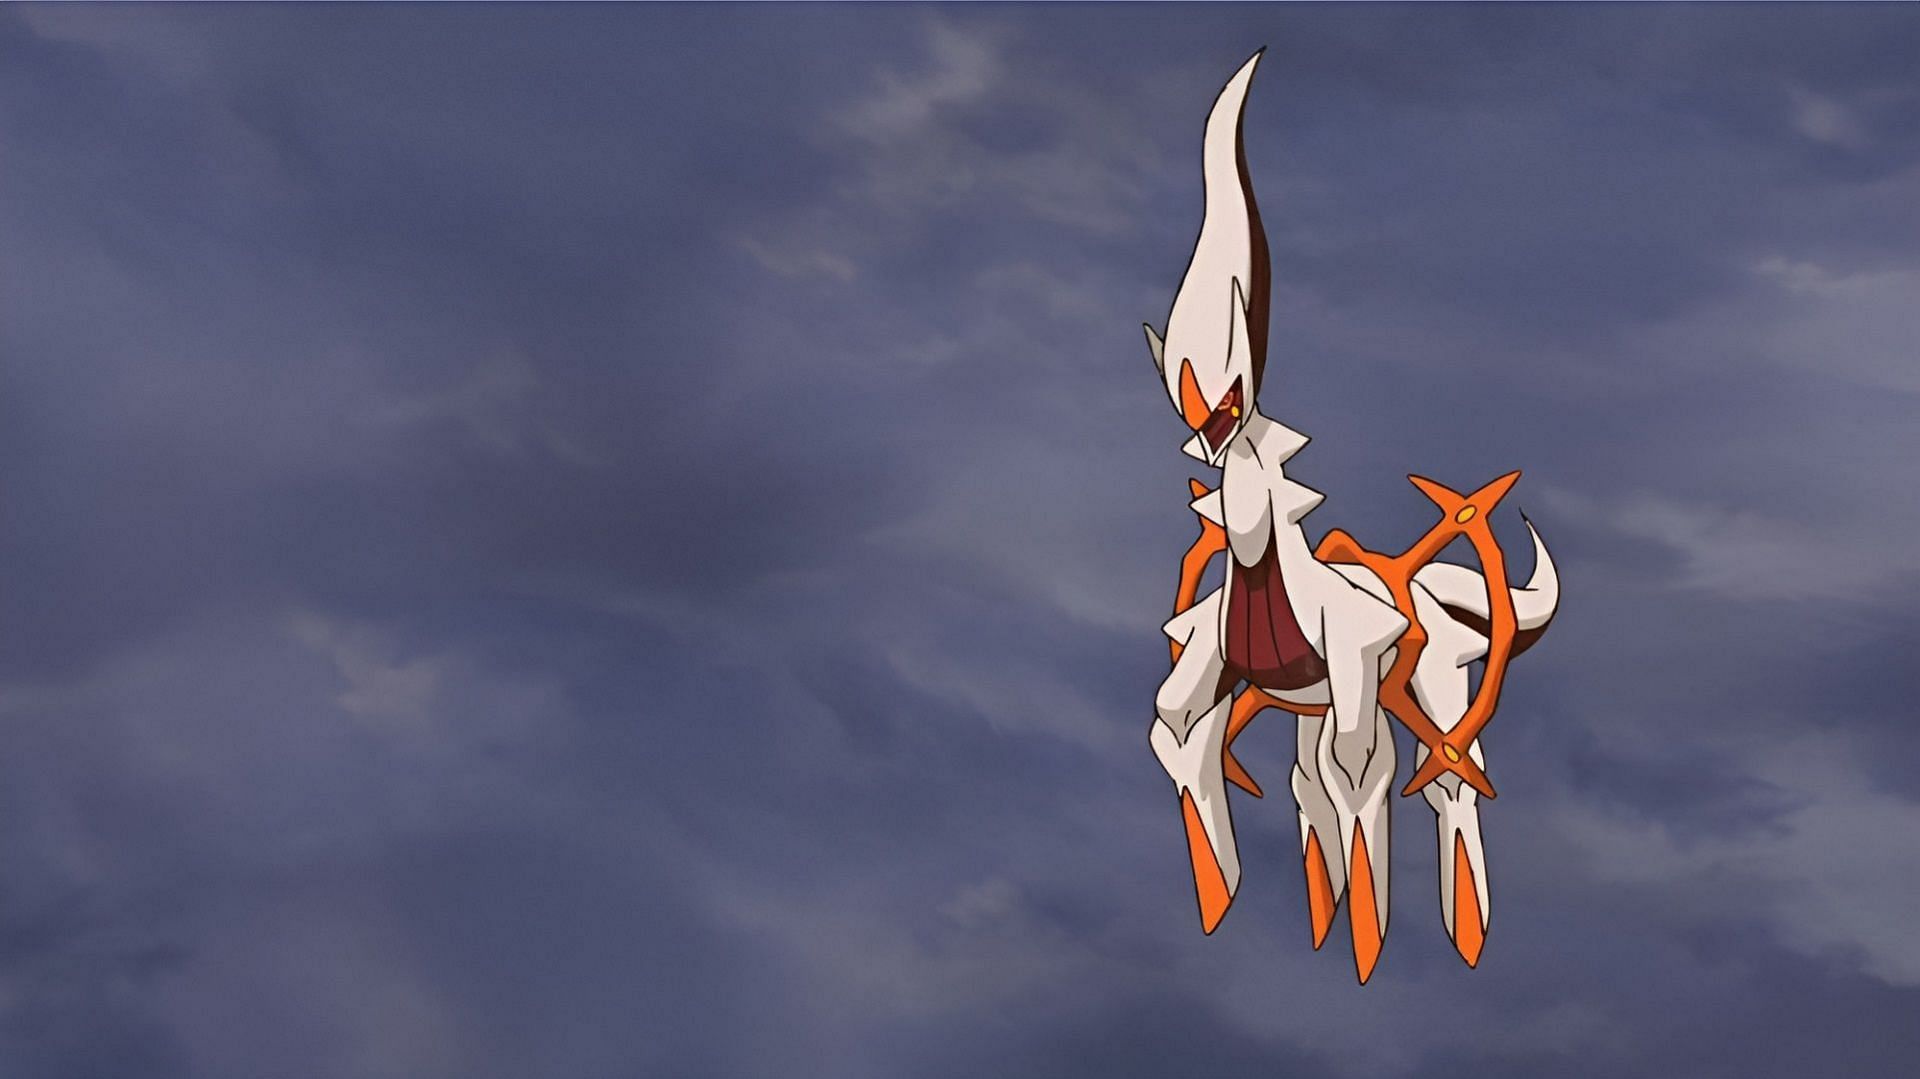 Fire-type Arceus in the anime (Image via The Pokemon Company)